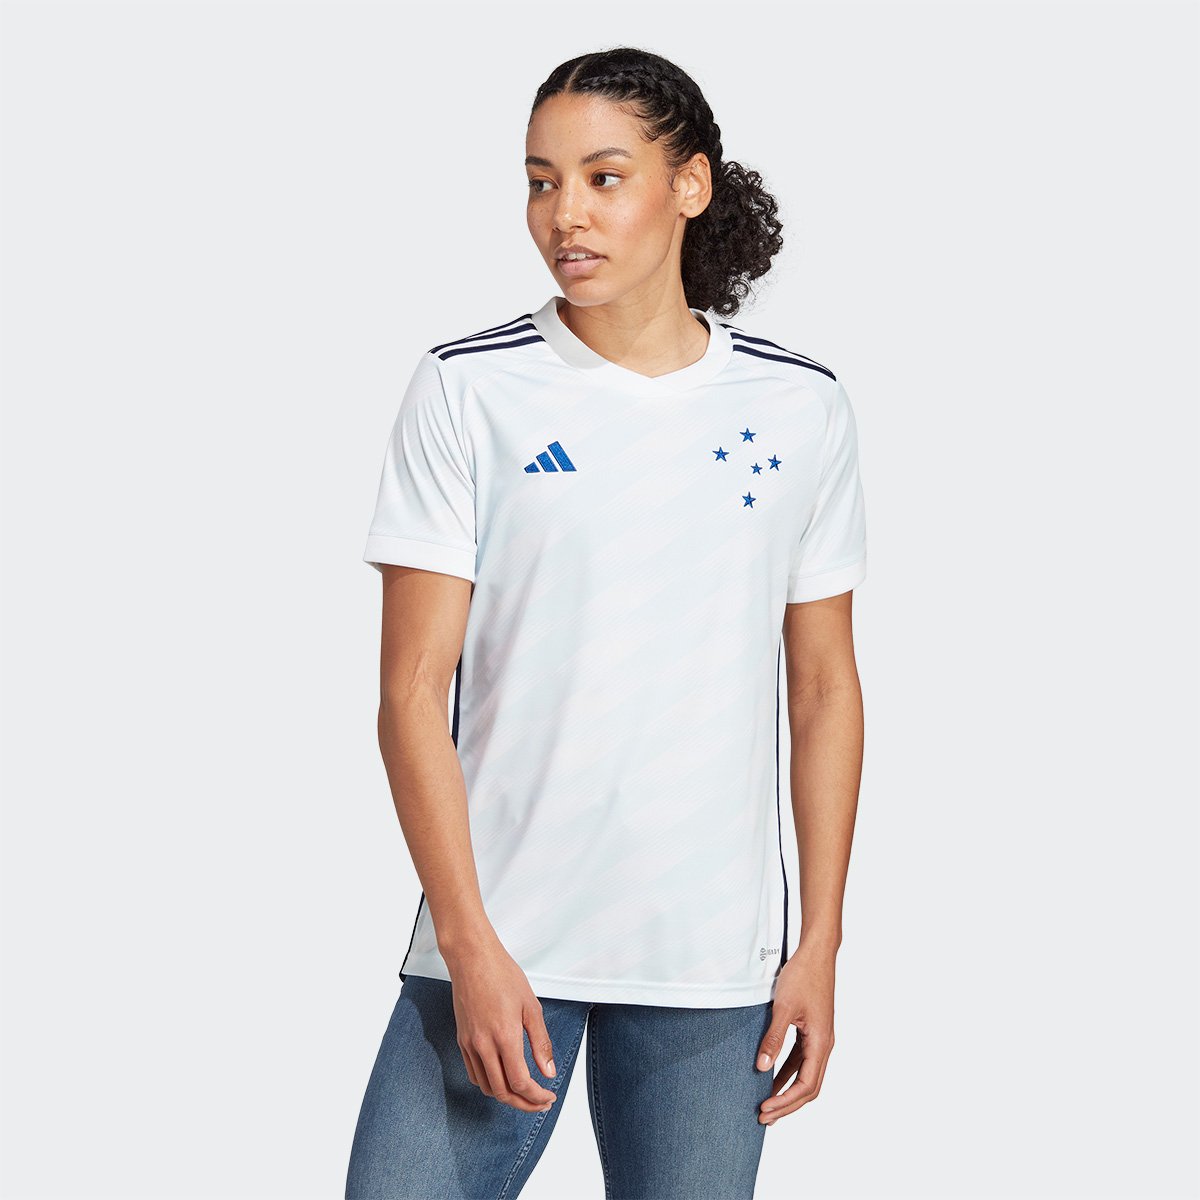 Camisa Cruzeiro II 23/24 s/n° Torcedor Adidas Feminina - Branco